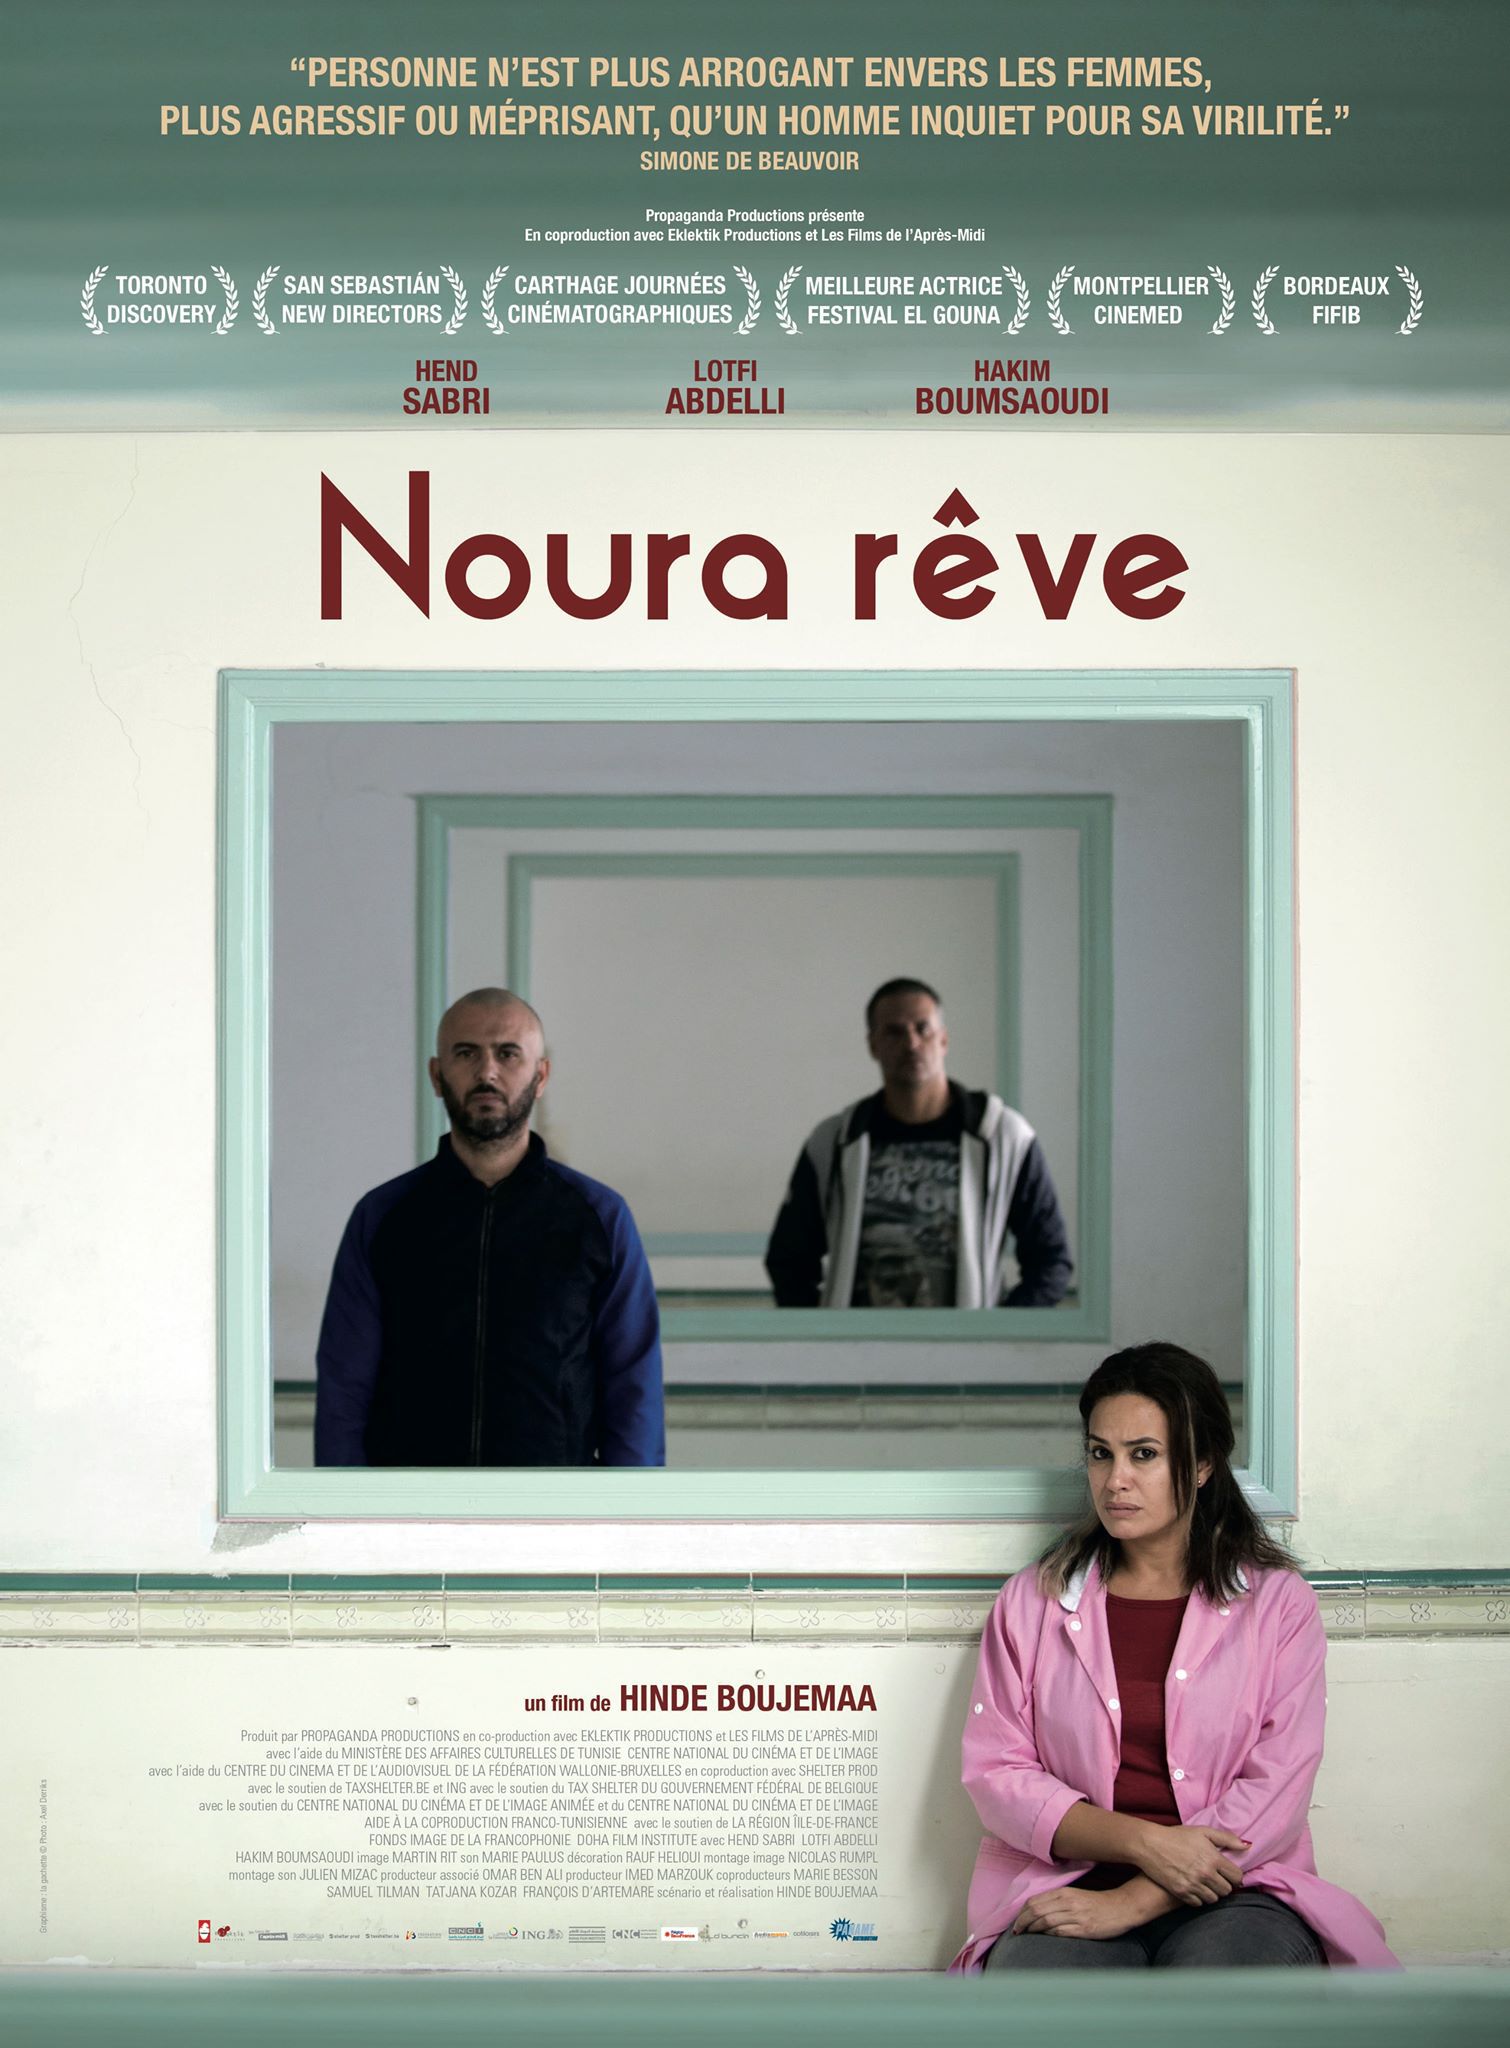 Noura rêve - Film (2019) streaming VF gratuit complet